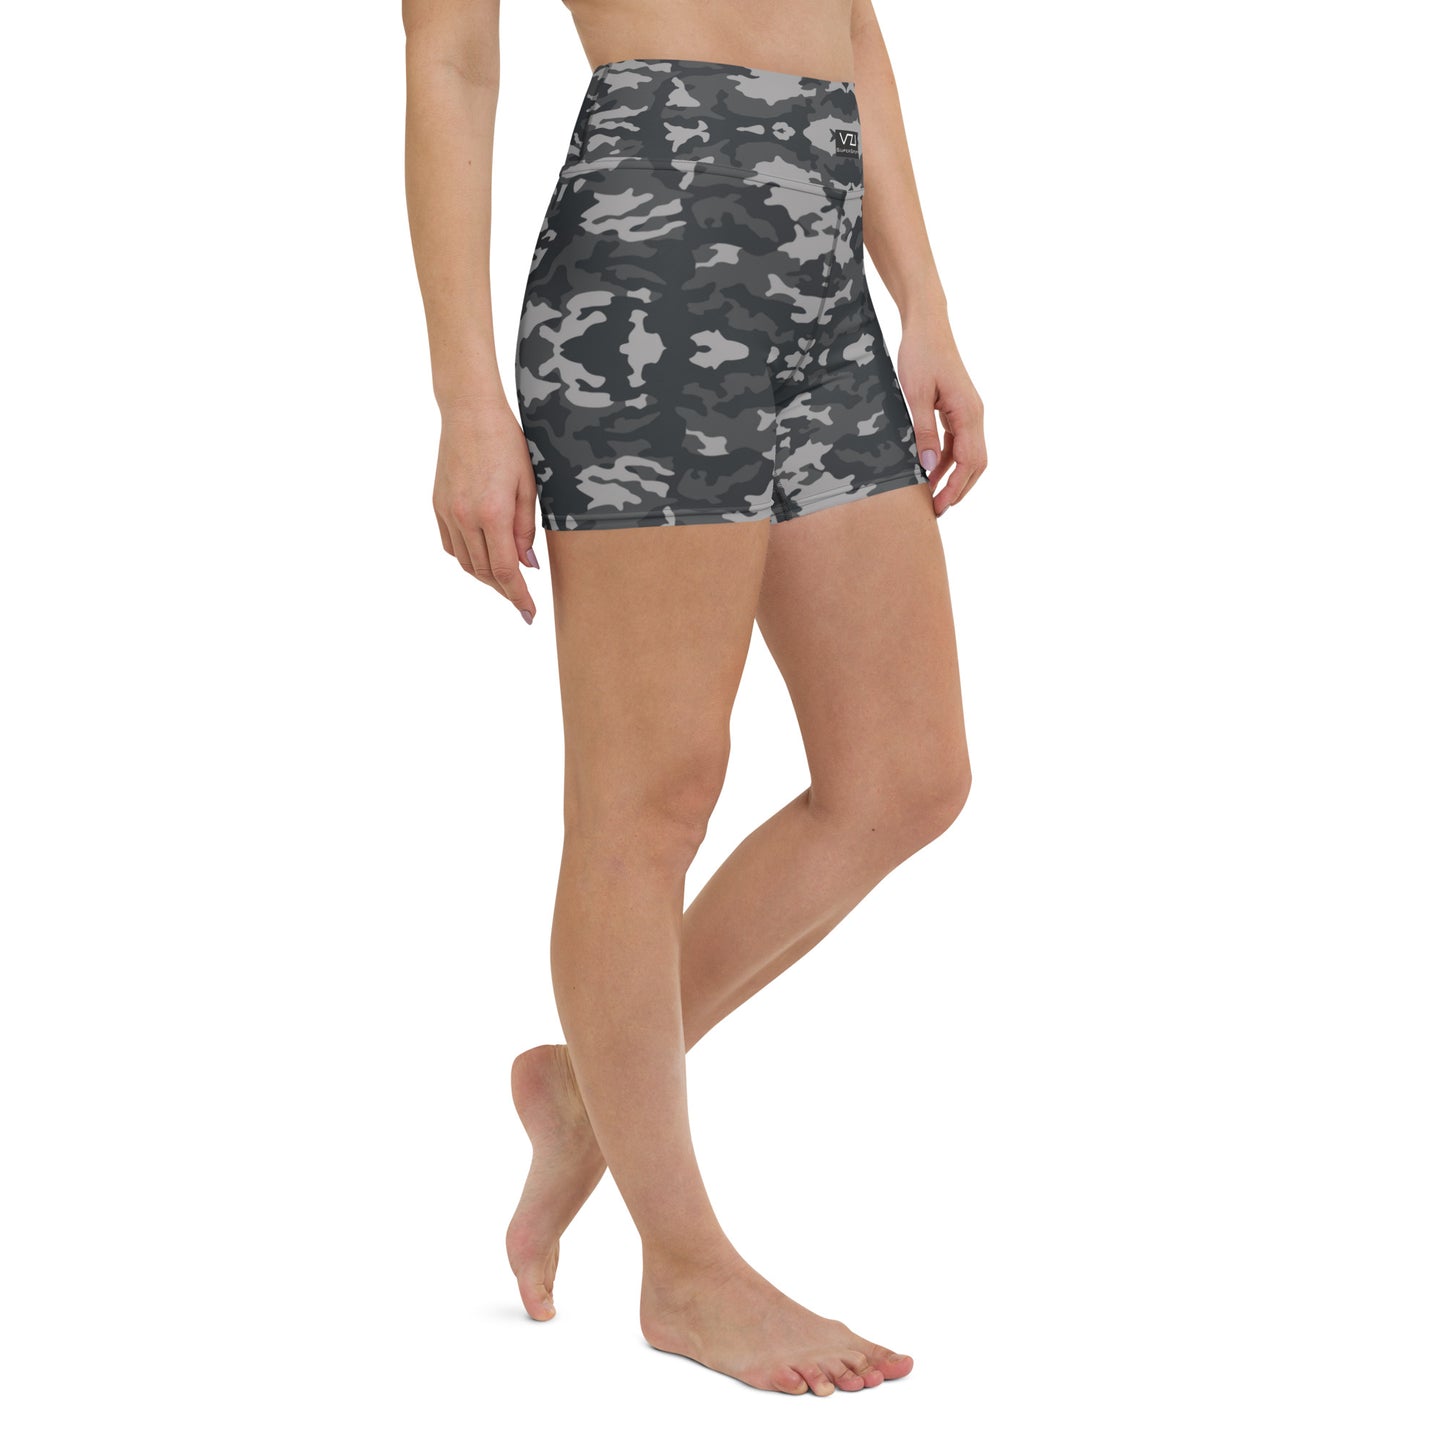 Army 2075: Shorts For Women's: - SuperSport, Endurance Series, High waistband, Inner pocket